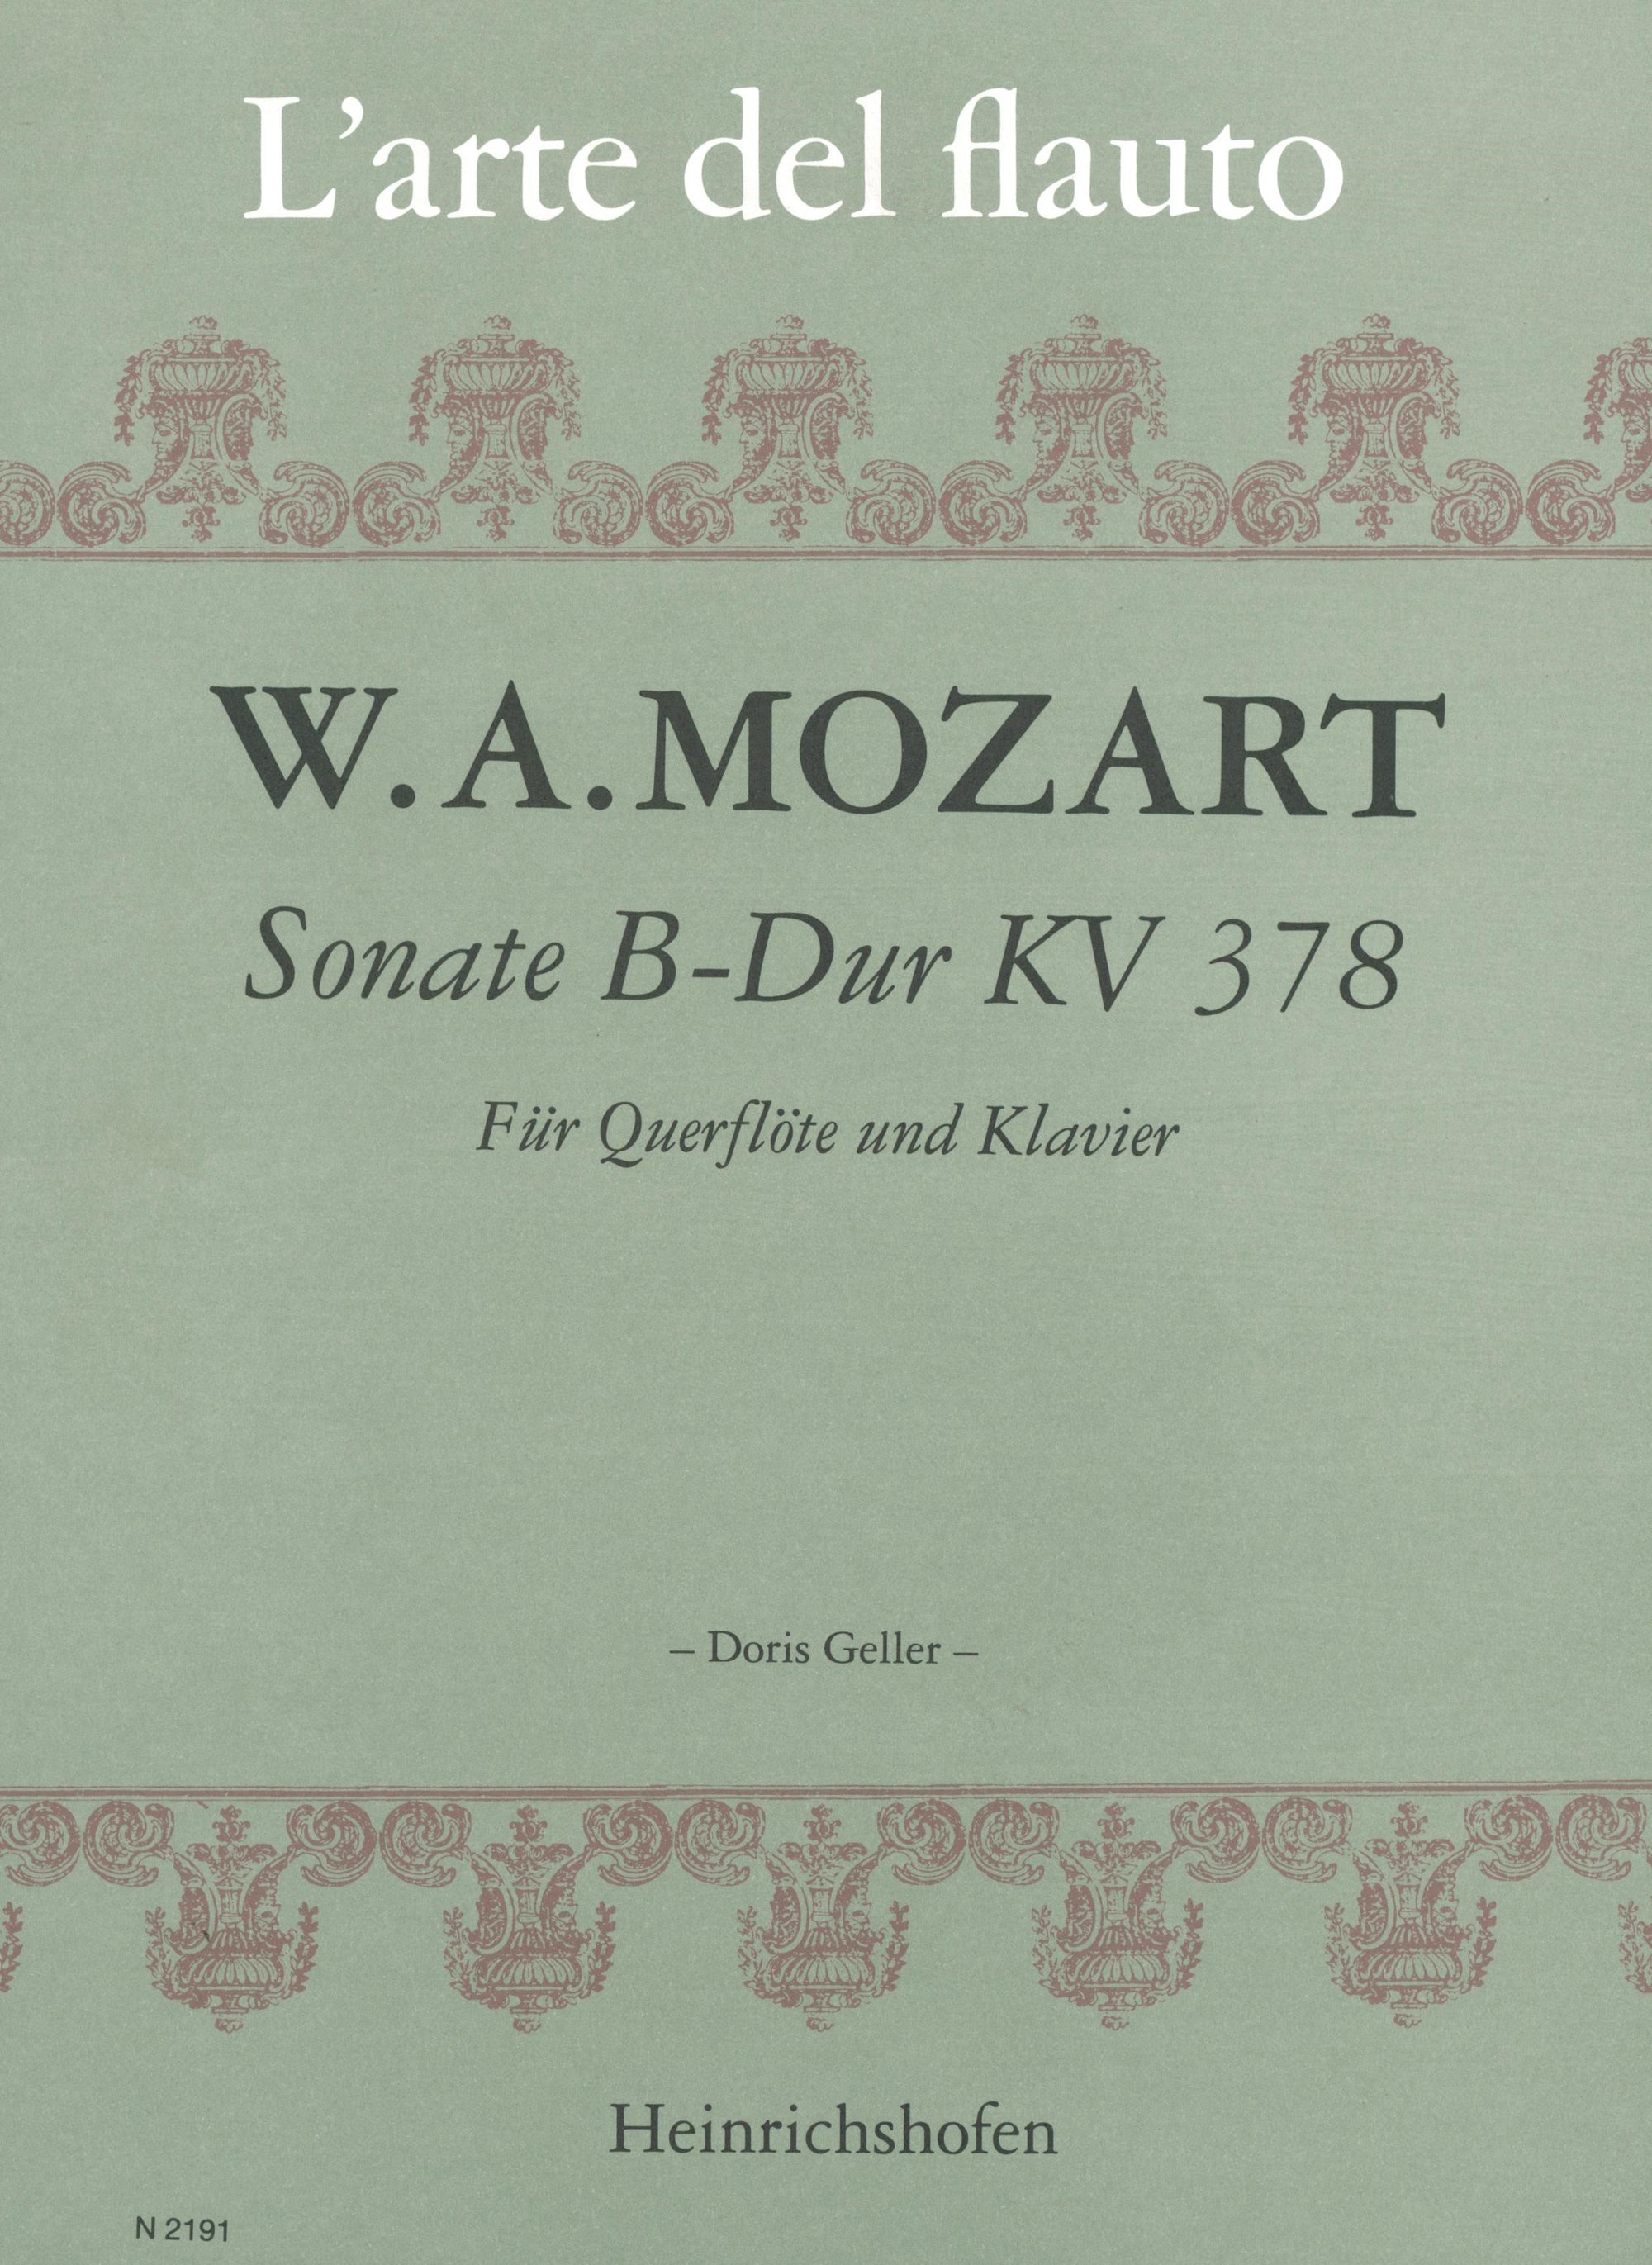 Mozart: Sonata in B-flat Major, K. 378 (arr. for flute & piano)